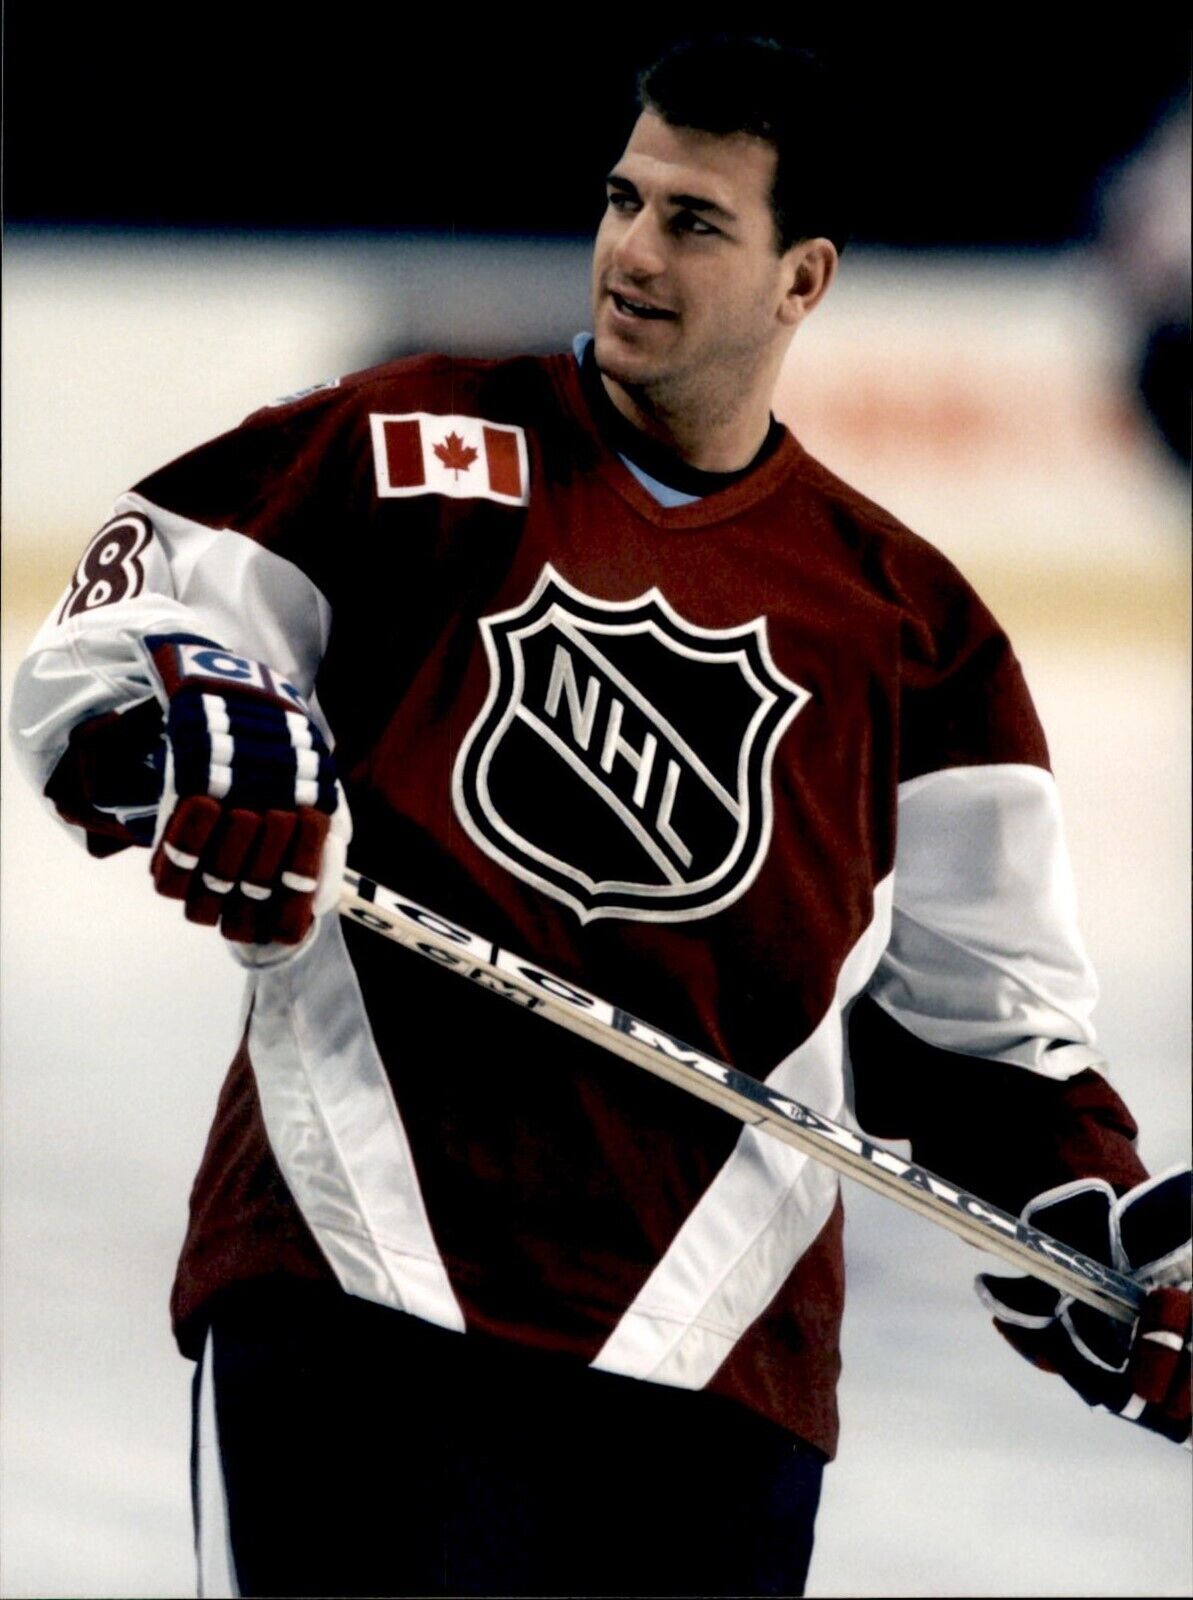 PF34 1999 Original Photo MARK RECCHI MONTREAL CANADIENS NHL HOCKEY ALL-STAR GAME